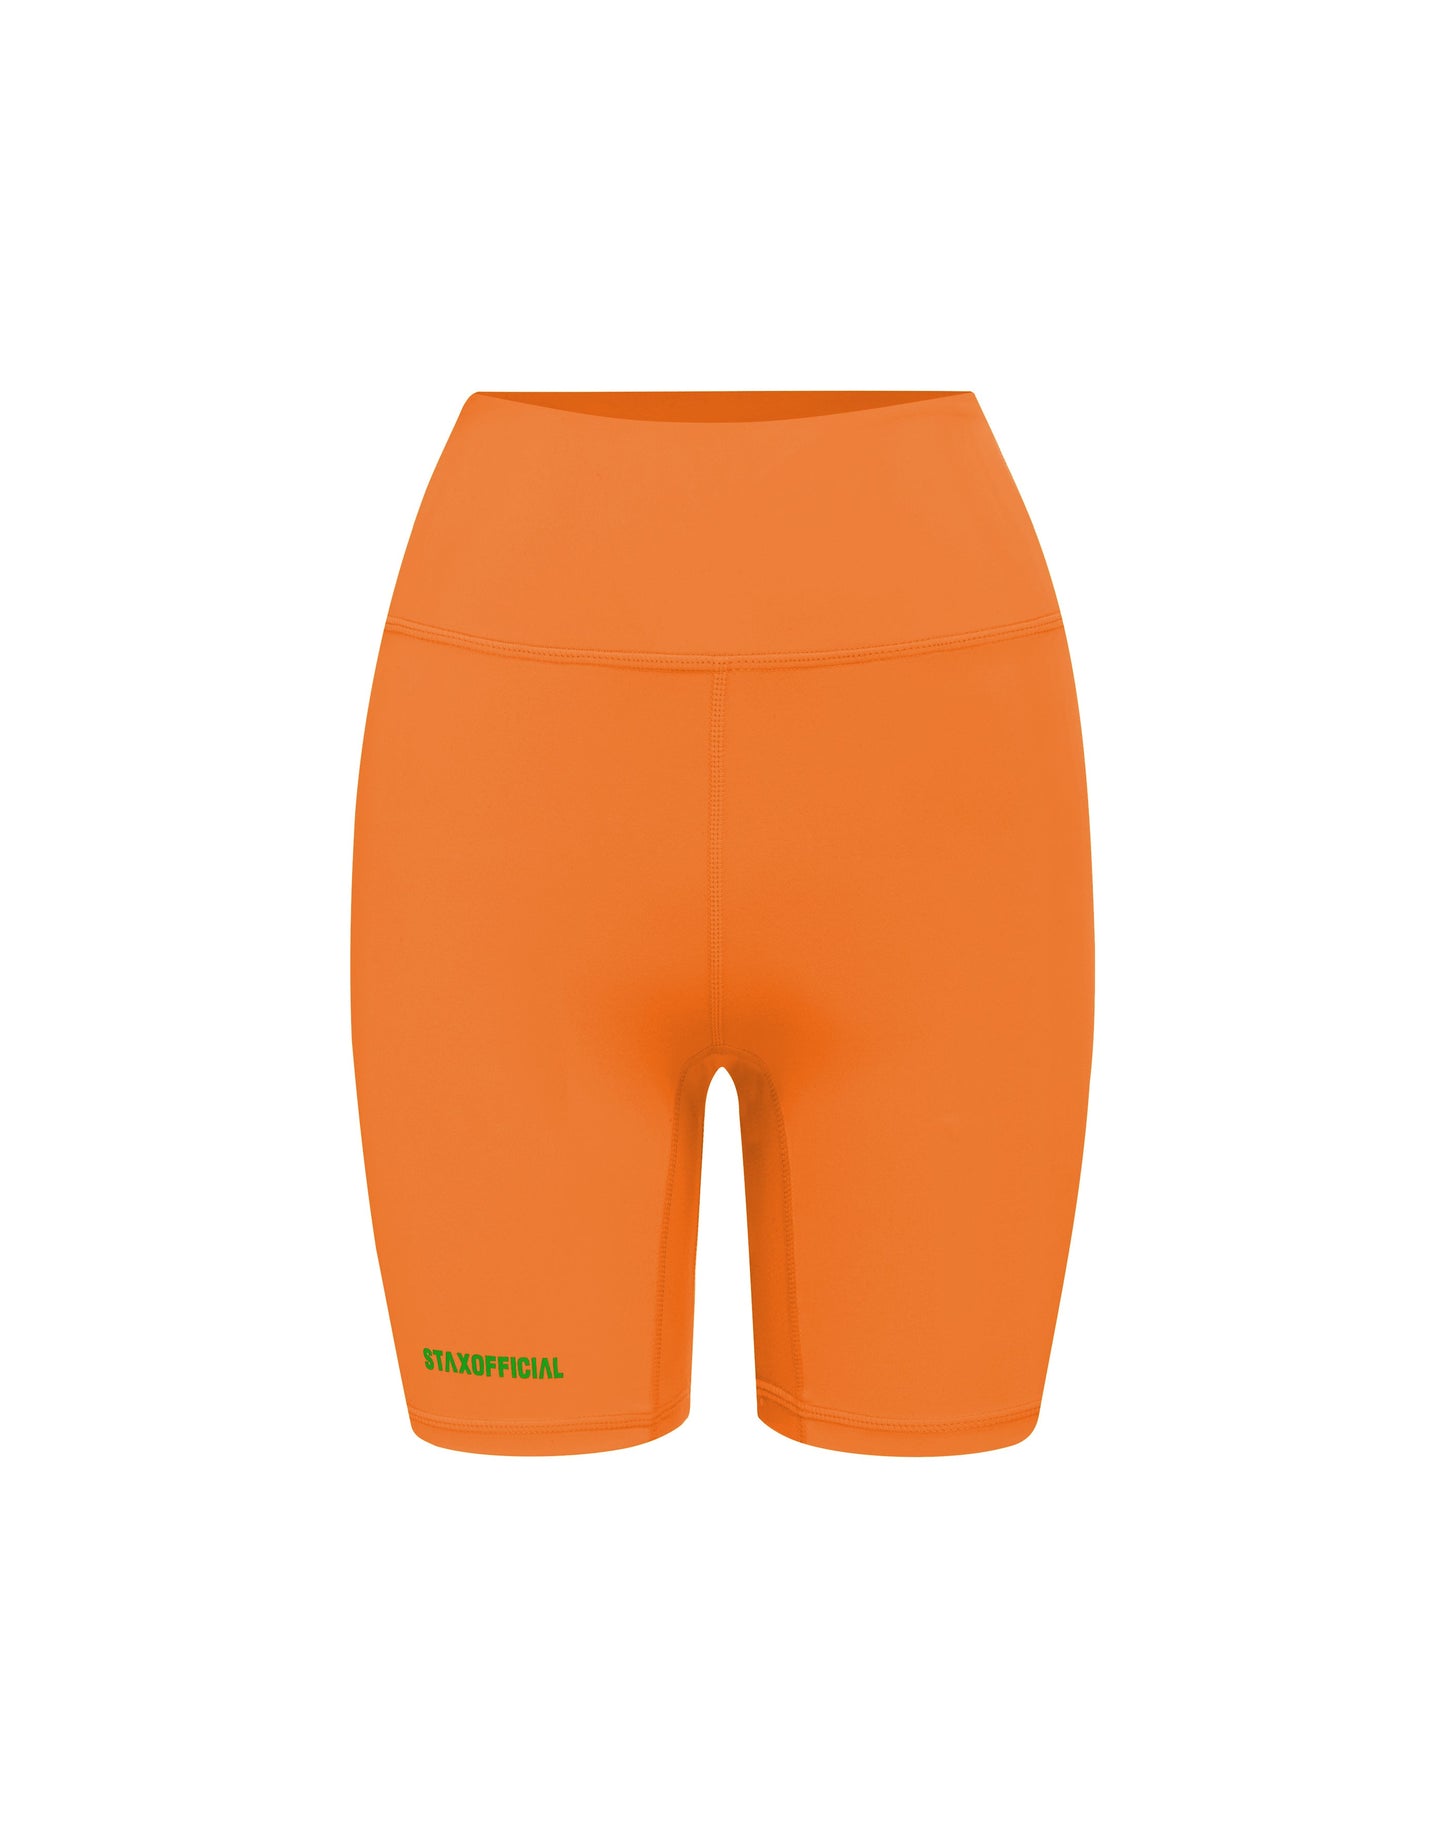 Summer 22 Midi Bike Shorts - Orange